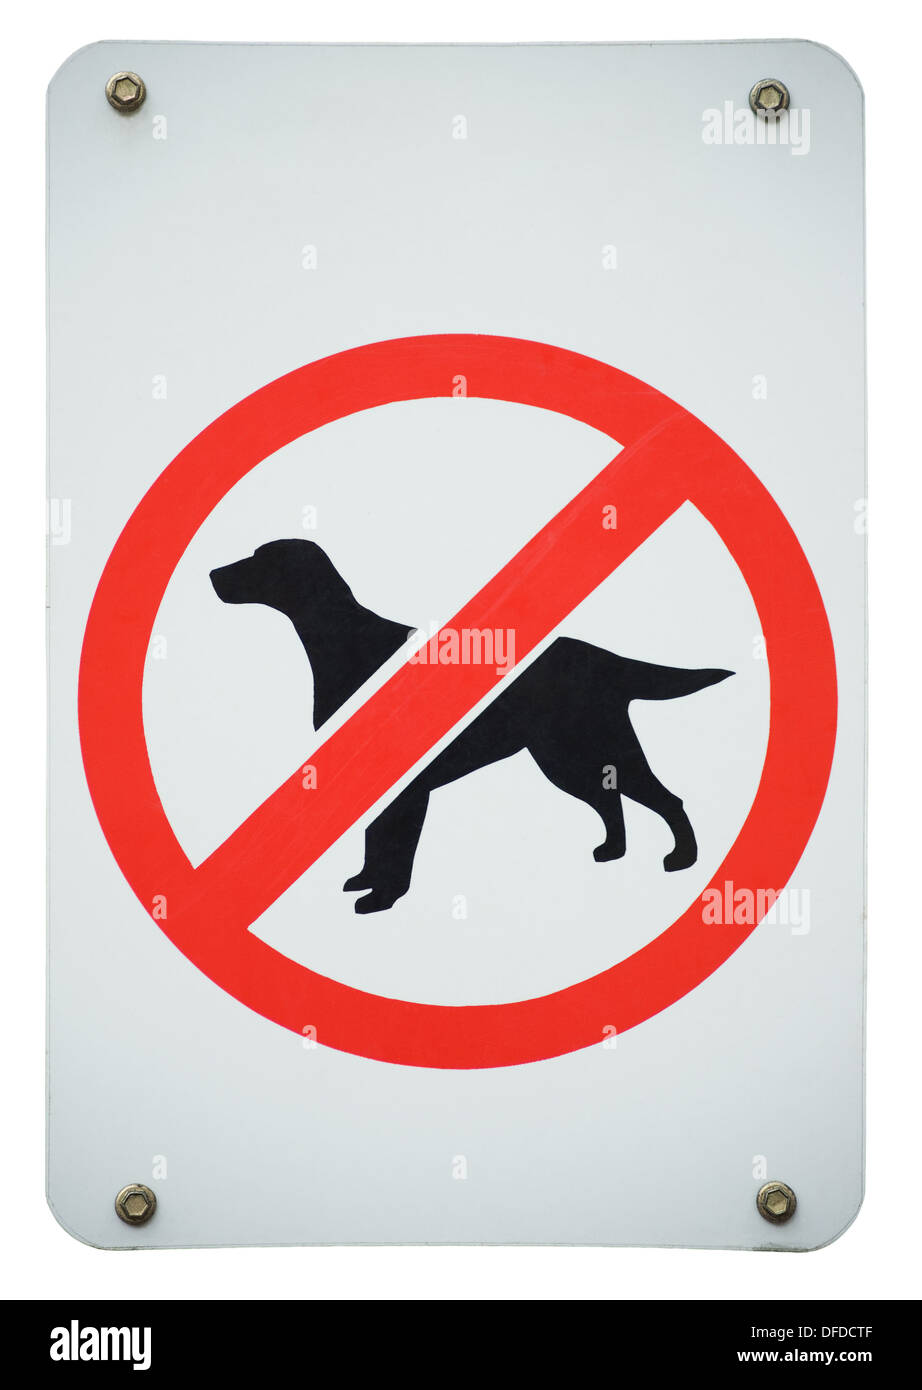 Вход с собаками запрещен. Табличка собакам вход воспрещен. Вход с собаками запрещен табличка. Знак собака красная.